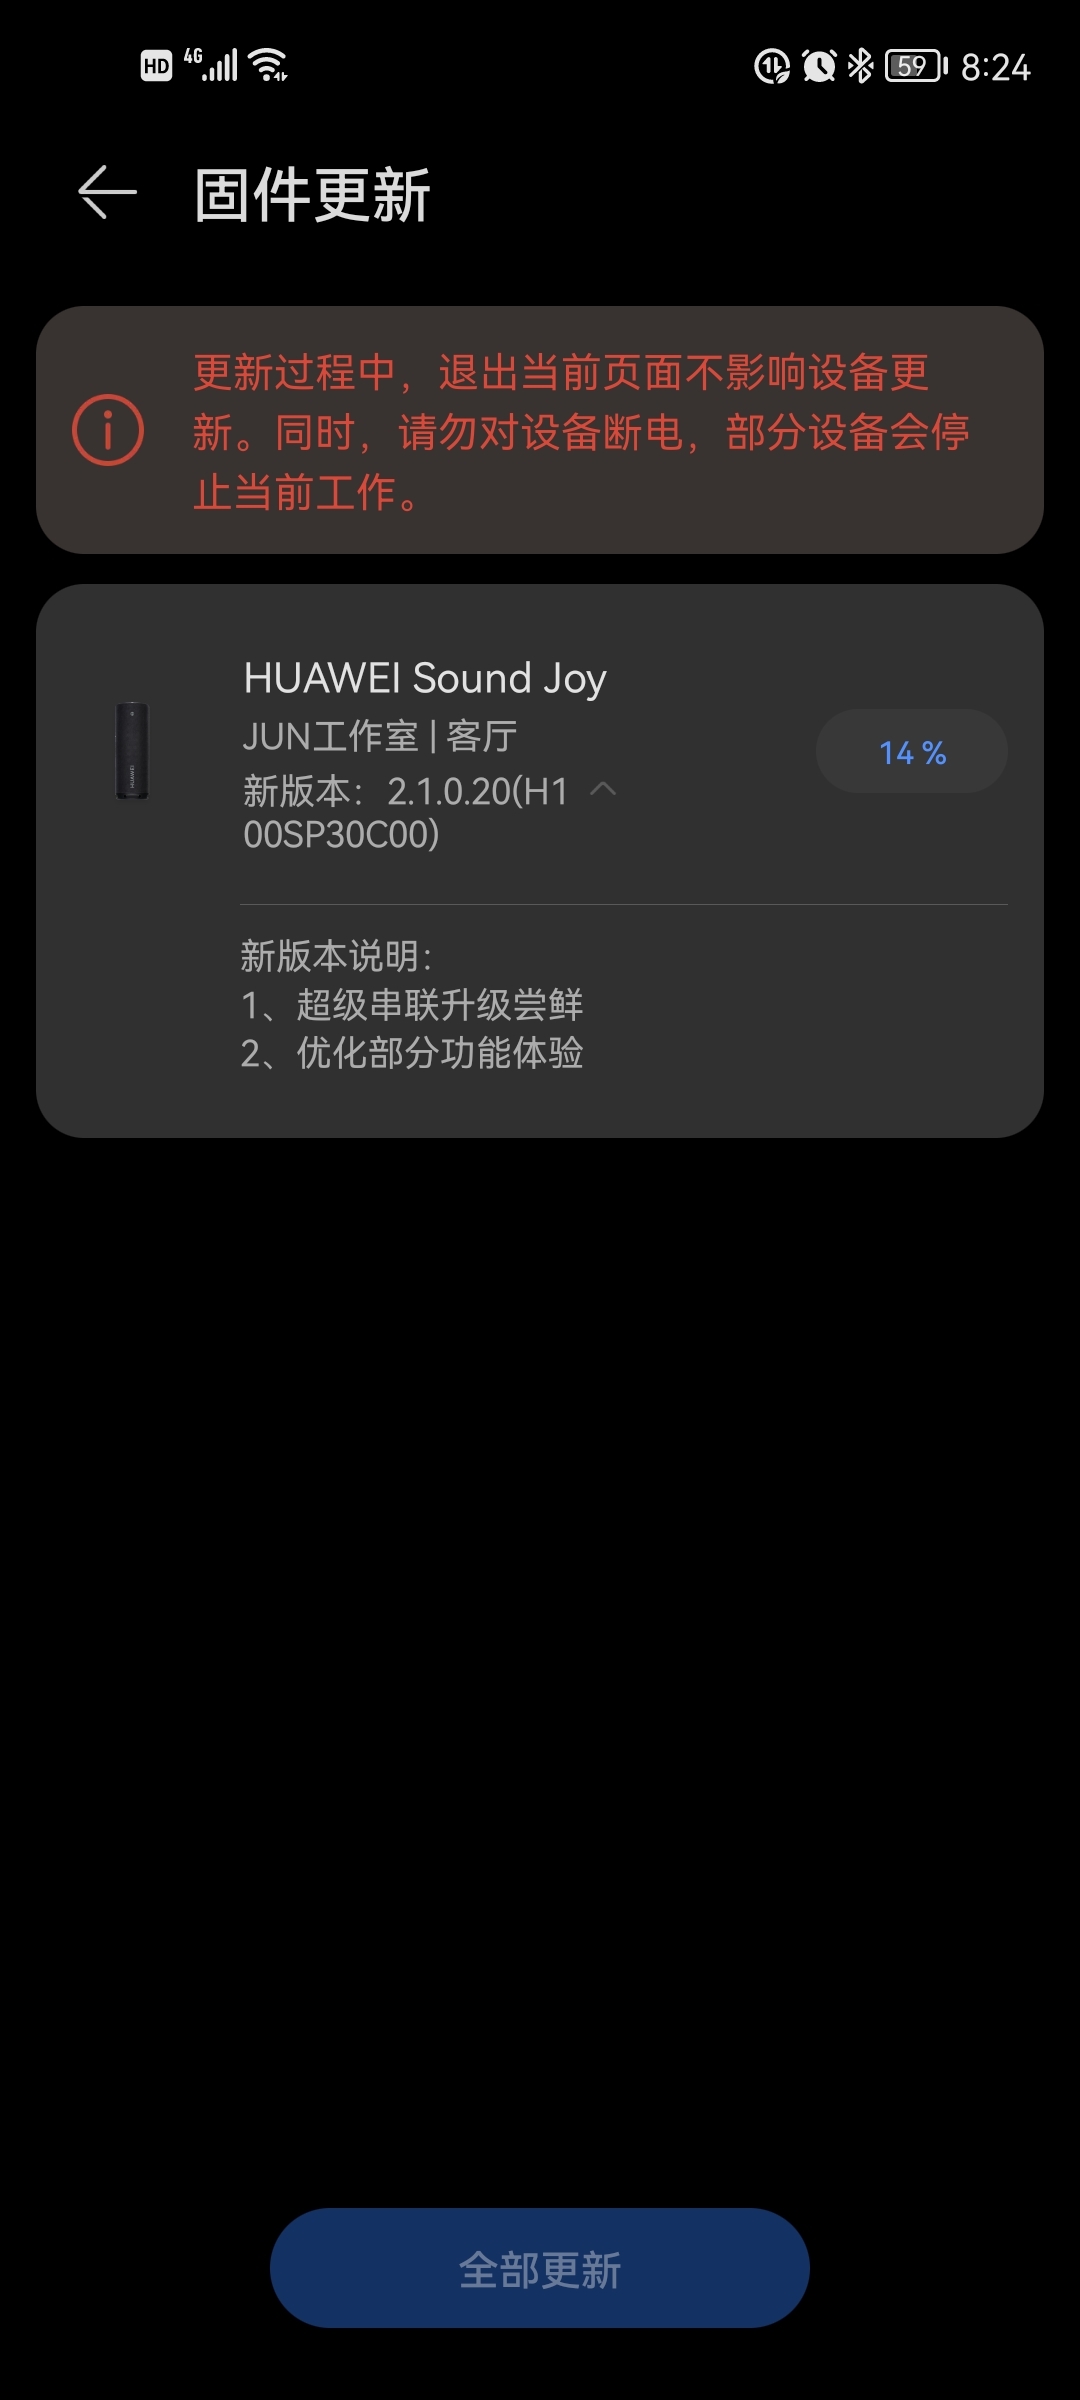 Huawei Sound Joy 2.1.0.20 (H100SP30C00) Software update